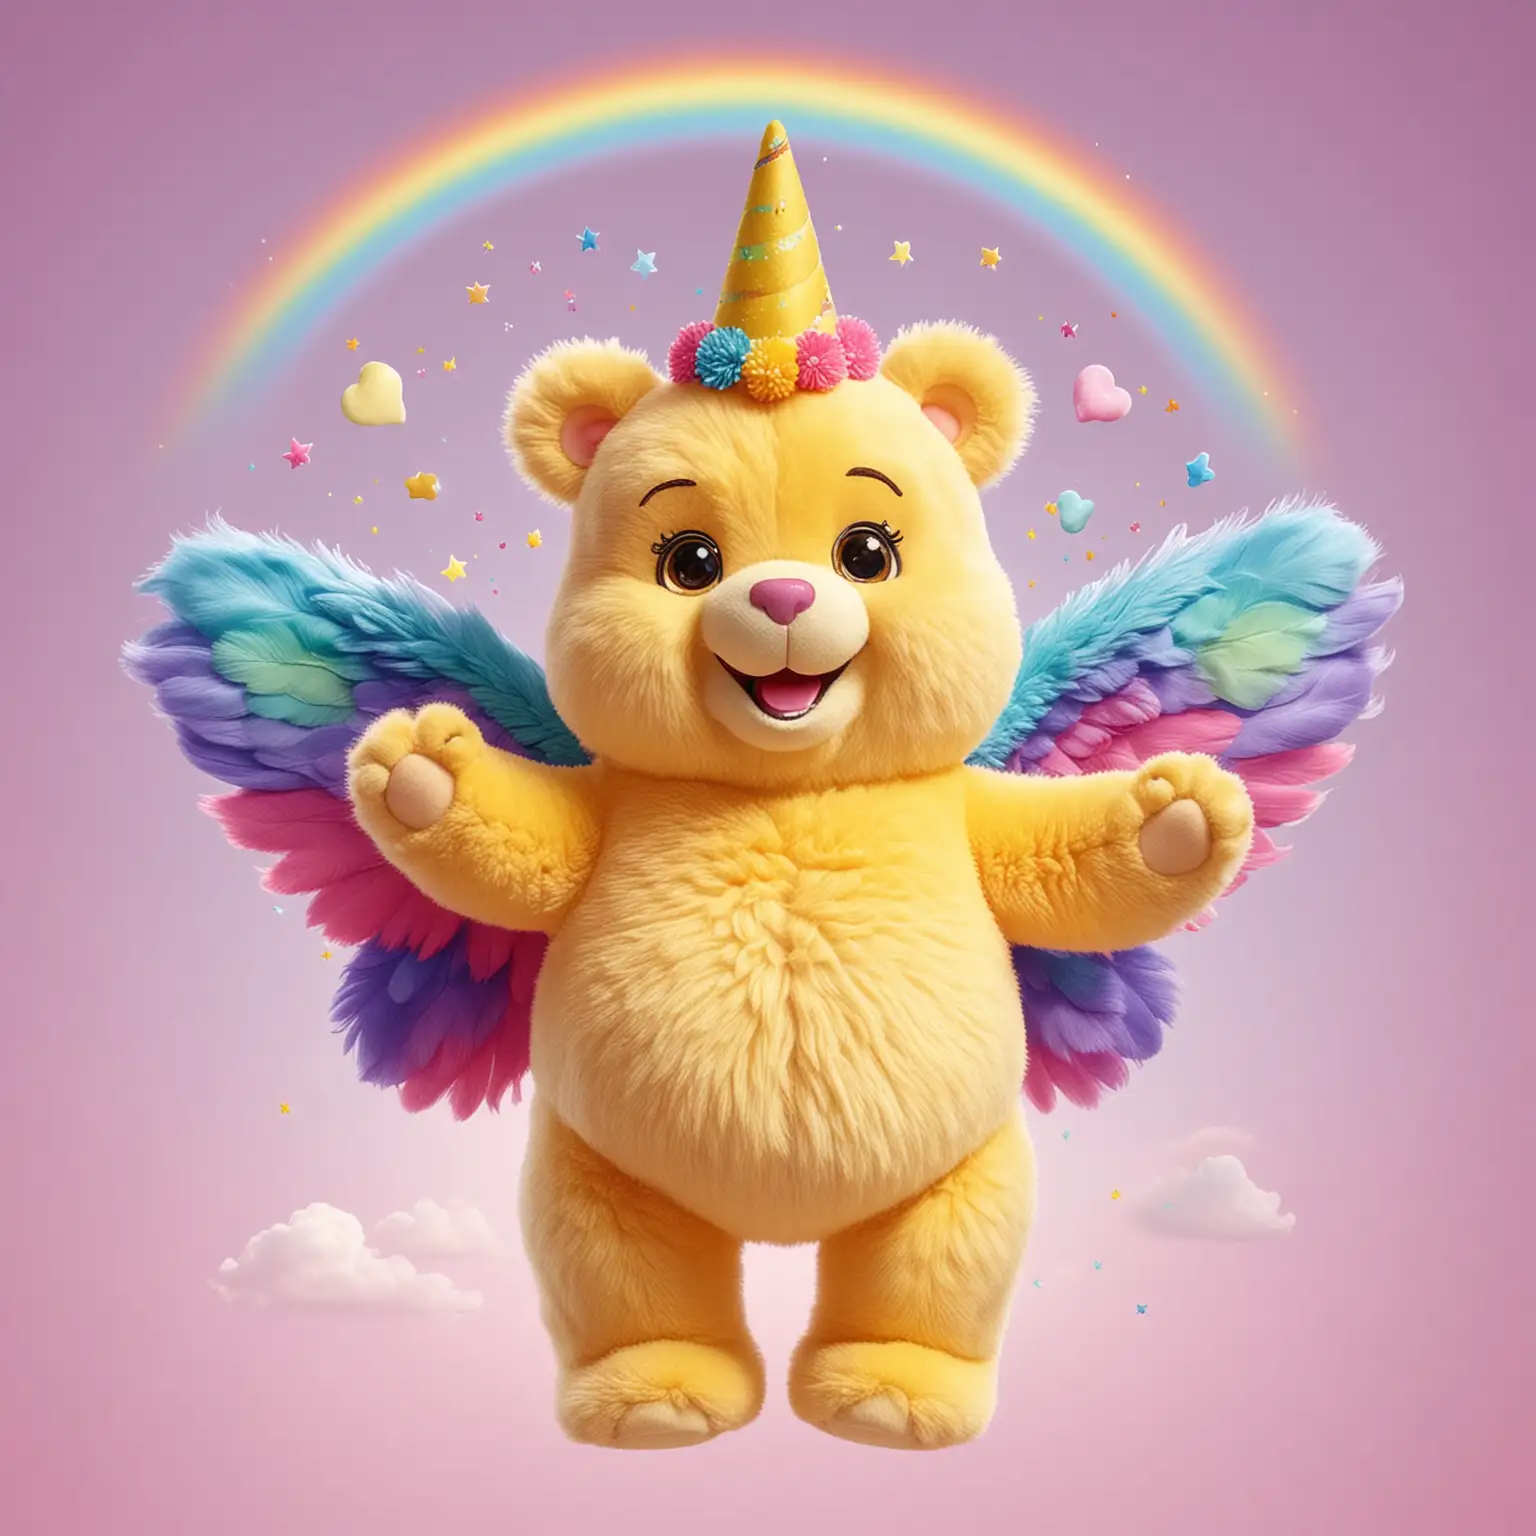 Joyful Fuzzy Yellow Care Bear with Rainbow Unicorn Horn Flying